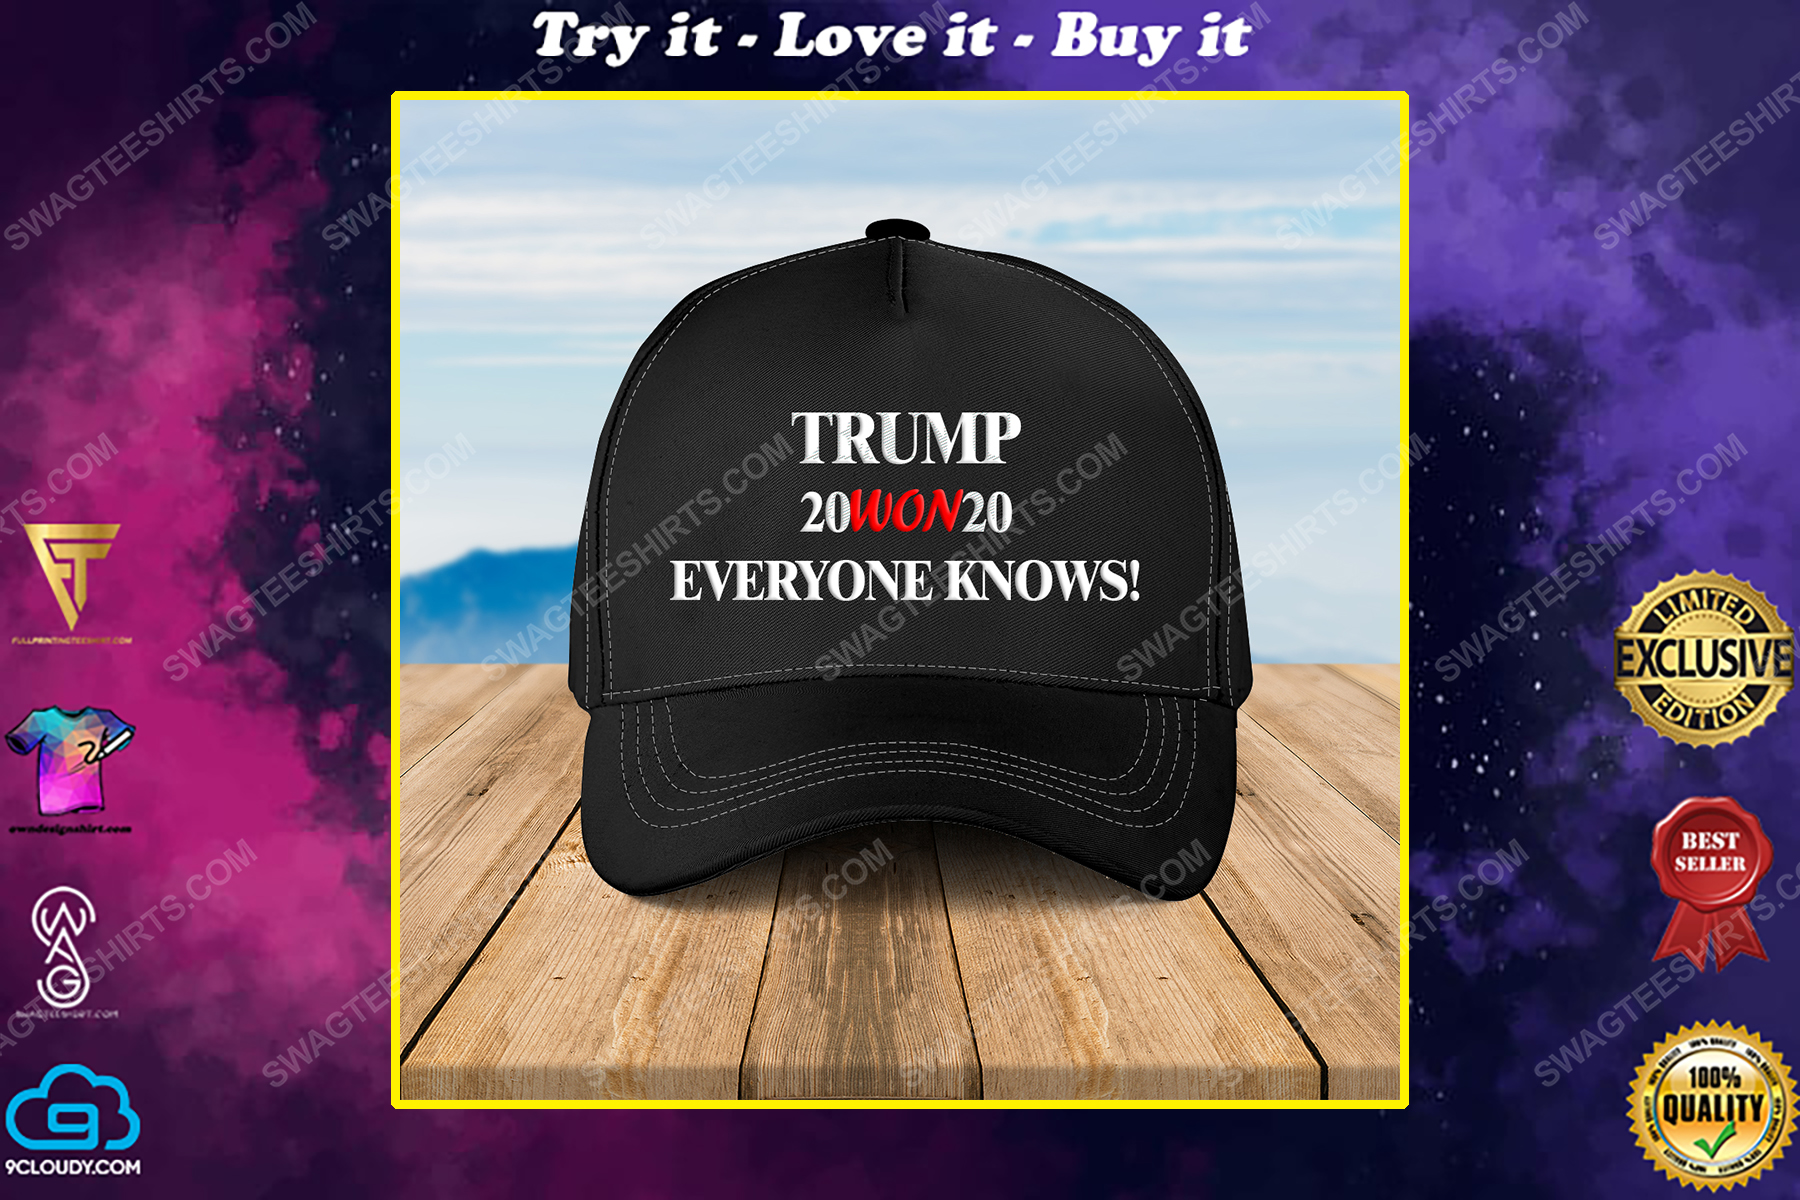 Trump 20won20 everyone american flag full print classic hat